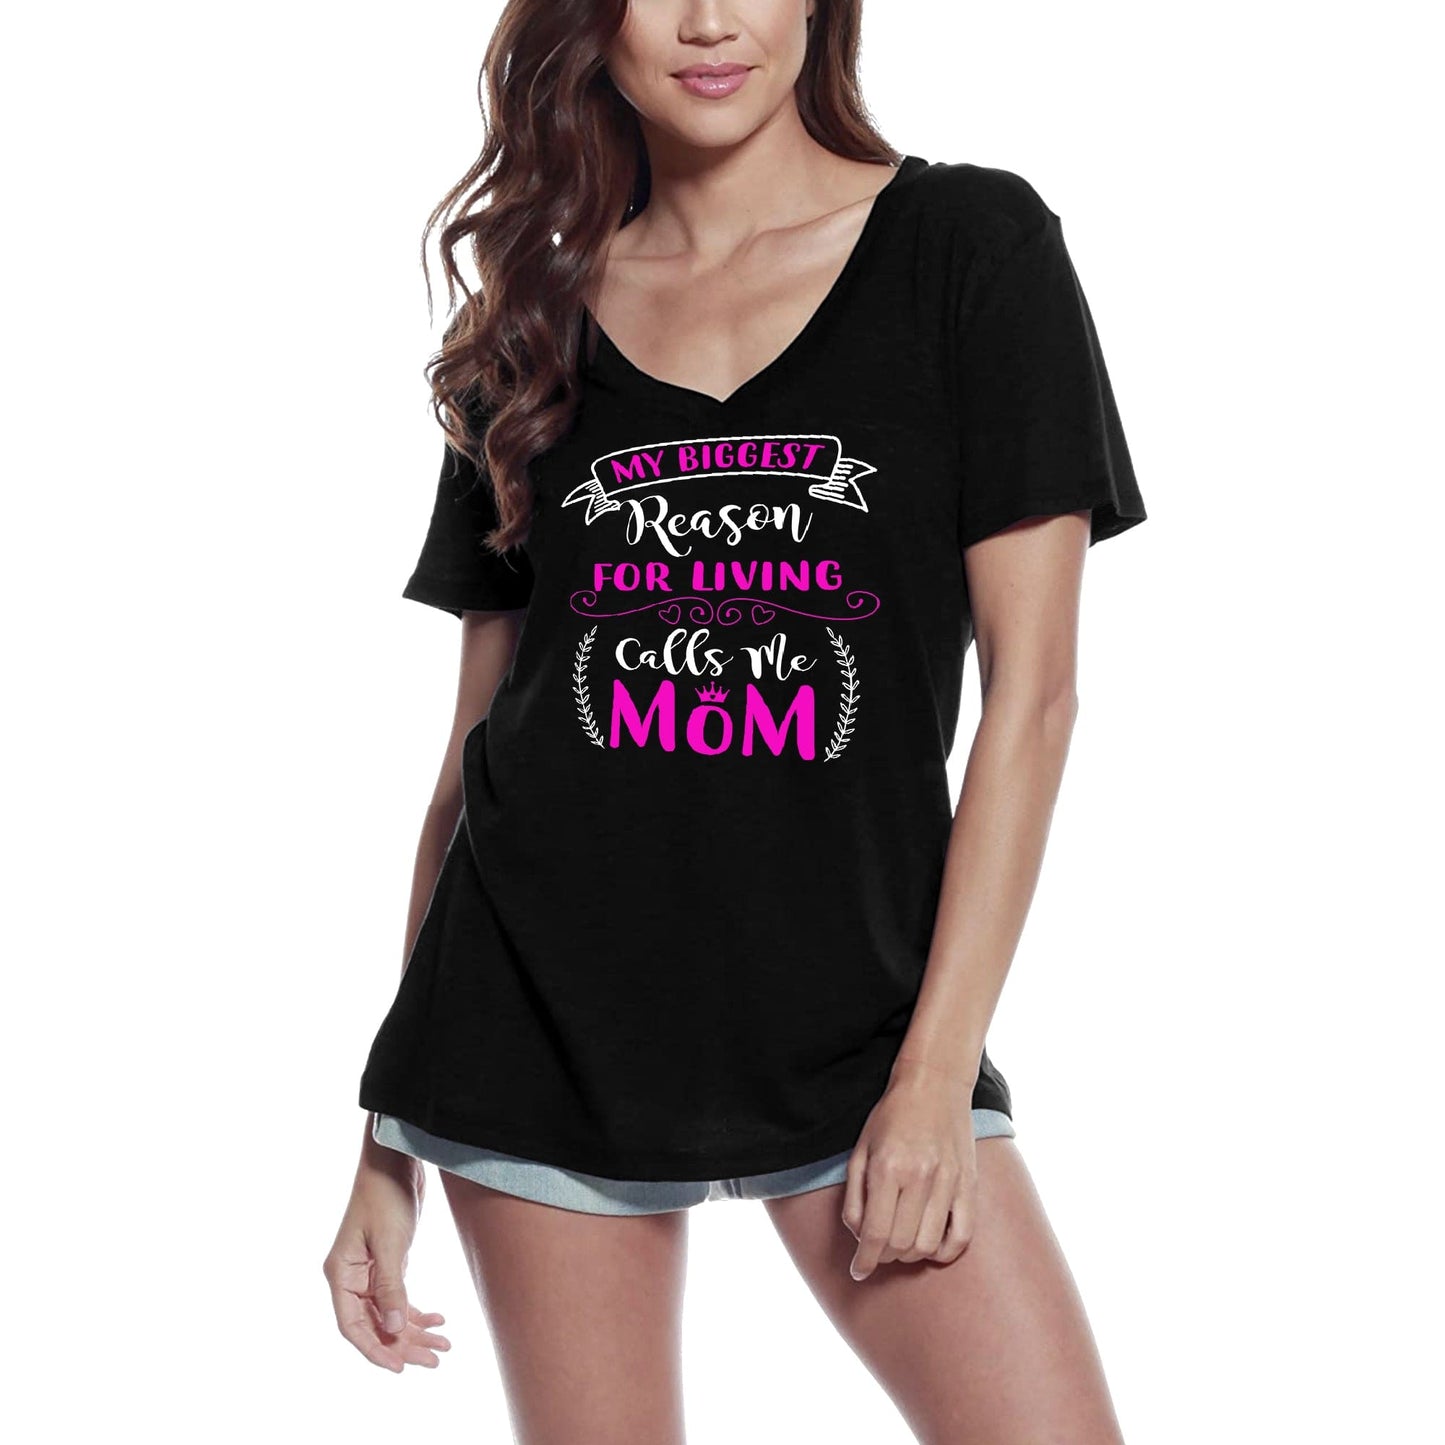 ULTRABASIC Women's T-Shirt My Biggest Reason for Living Calls Me Mom - Short Sleeve Tee Shirt Tops